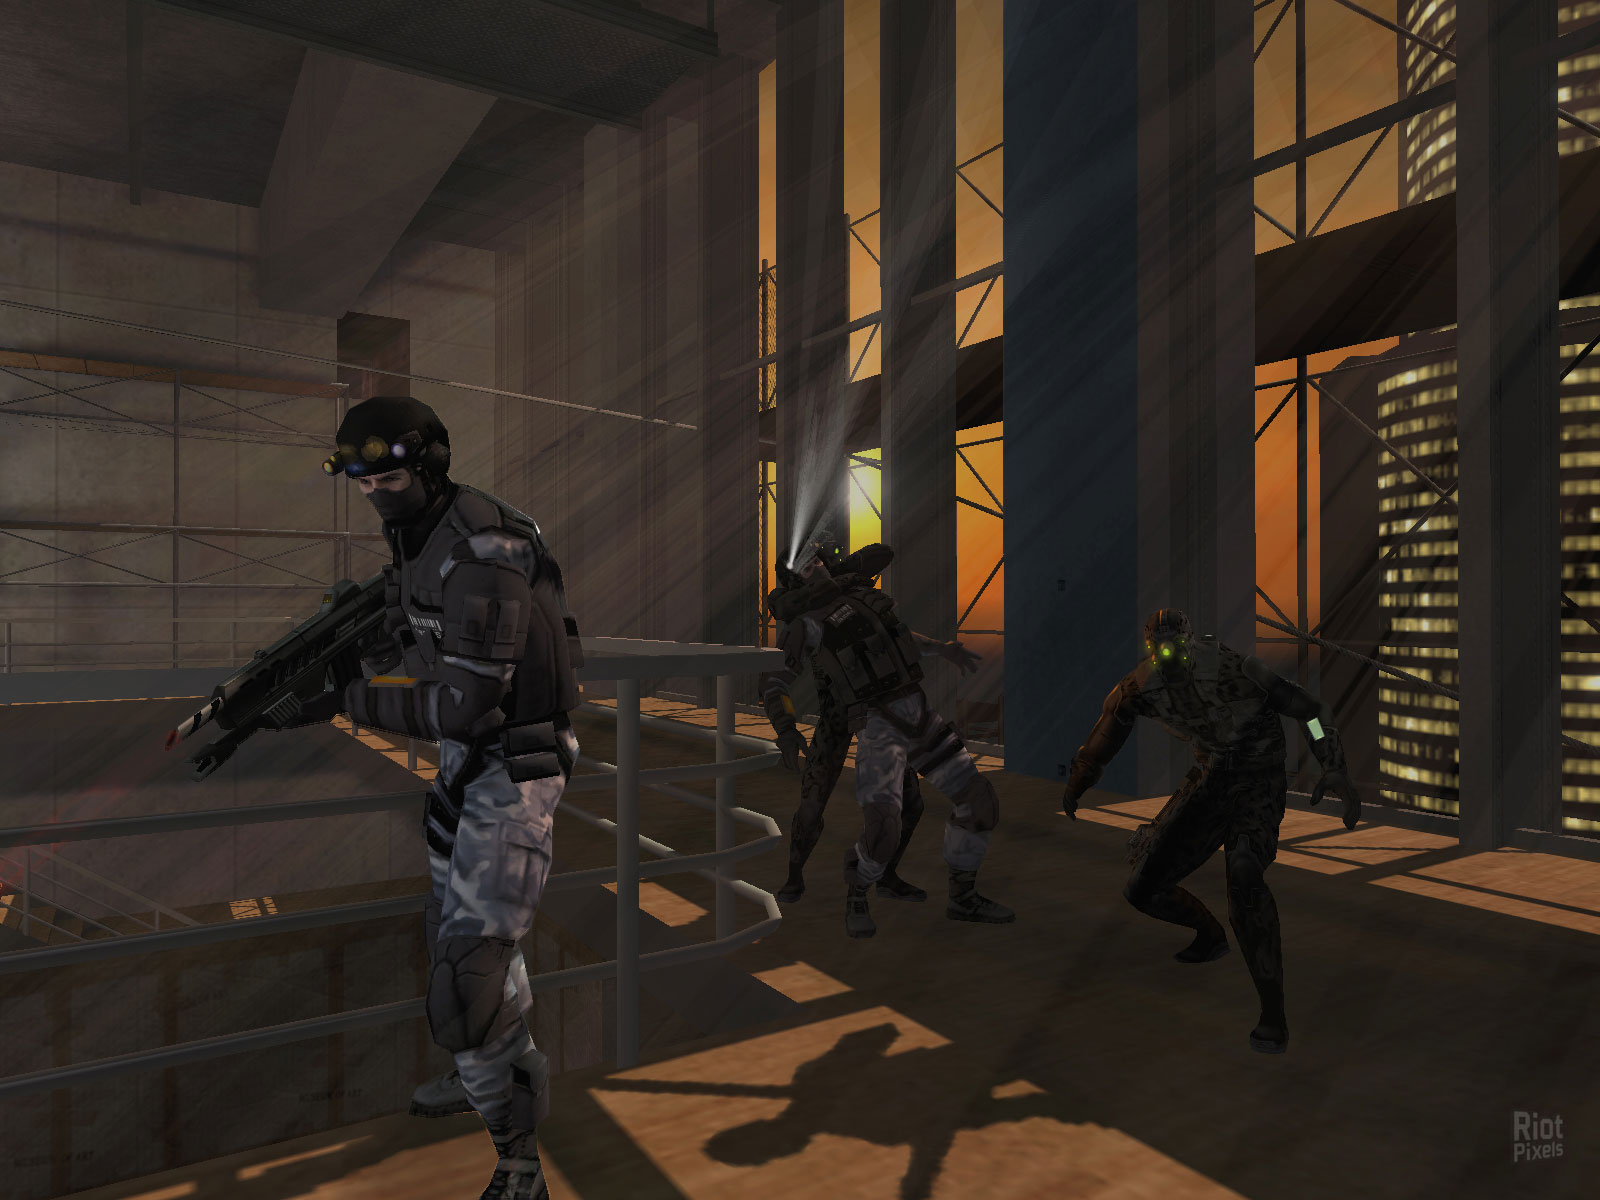 Screenshot of Tom Clancy's Splinter Cell: Pandora Tomorrow